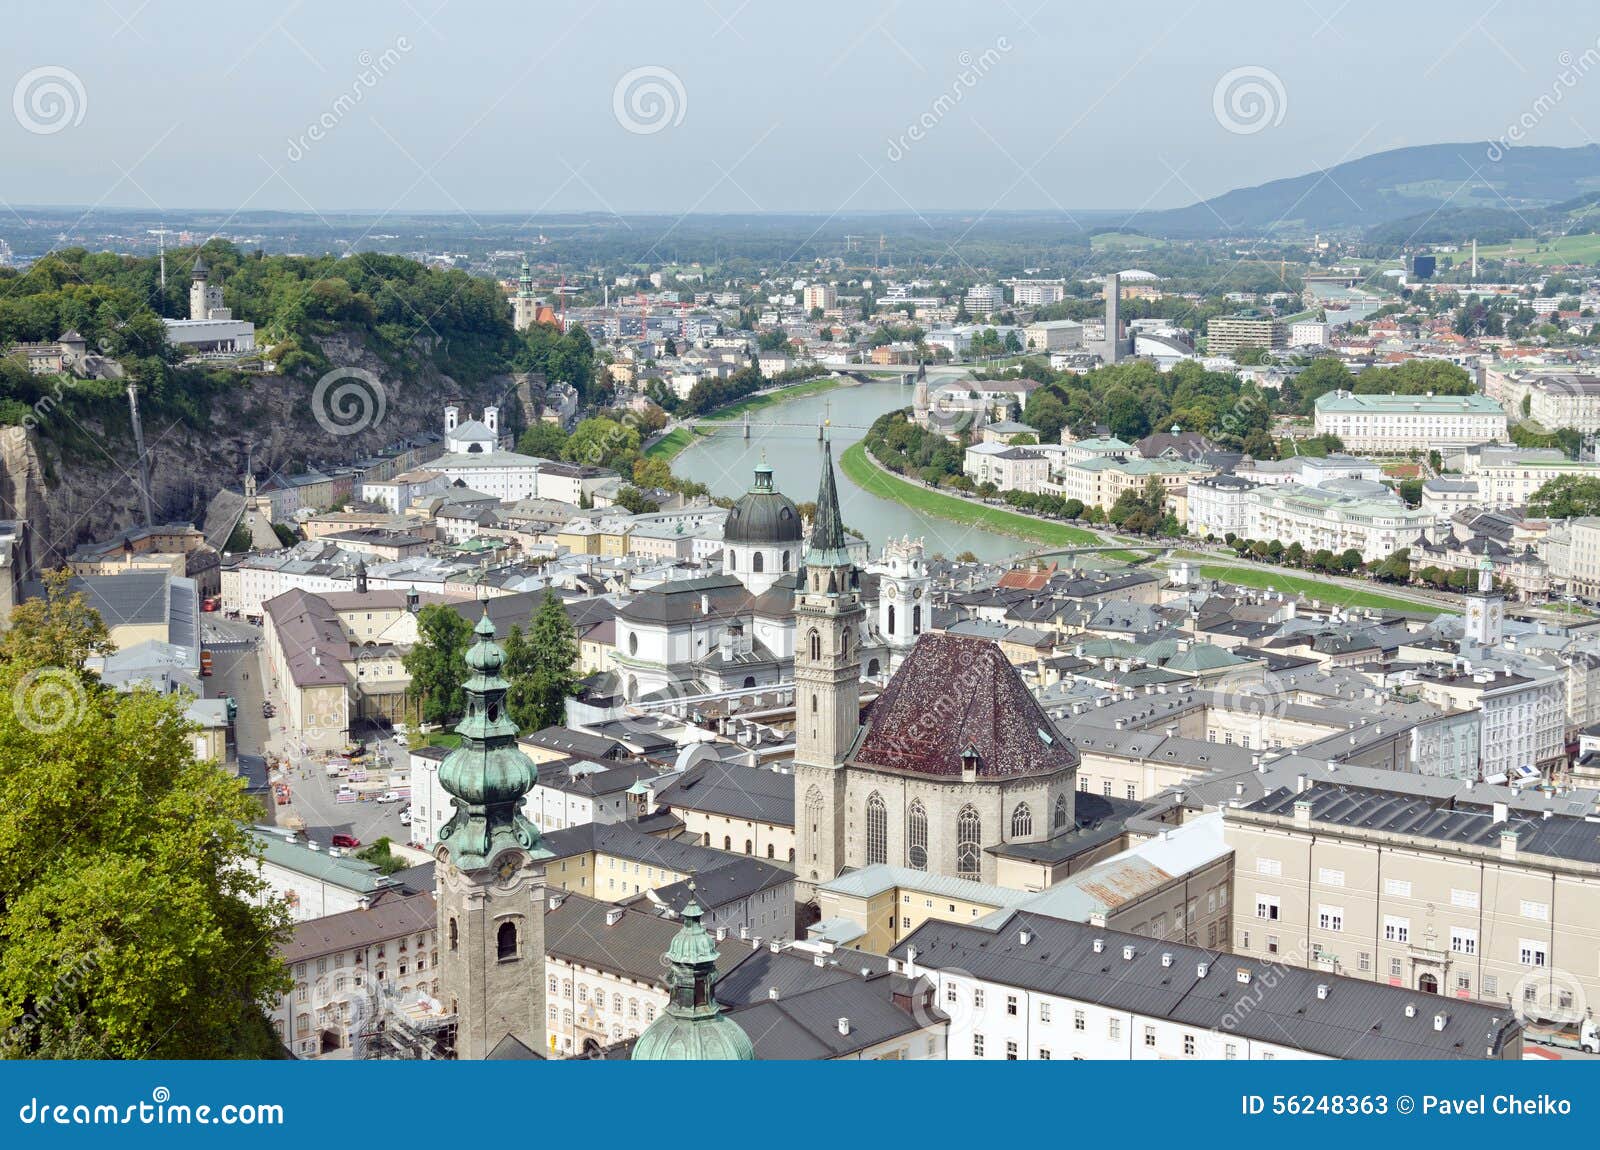 Salzburg stock image. Image of river, scenic, high, cityscape - 56248363